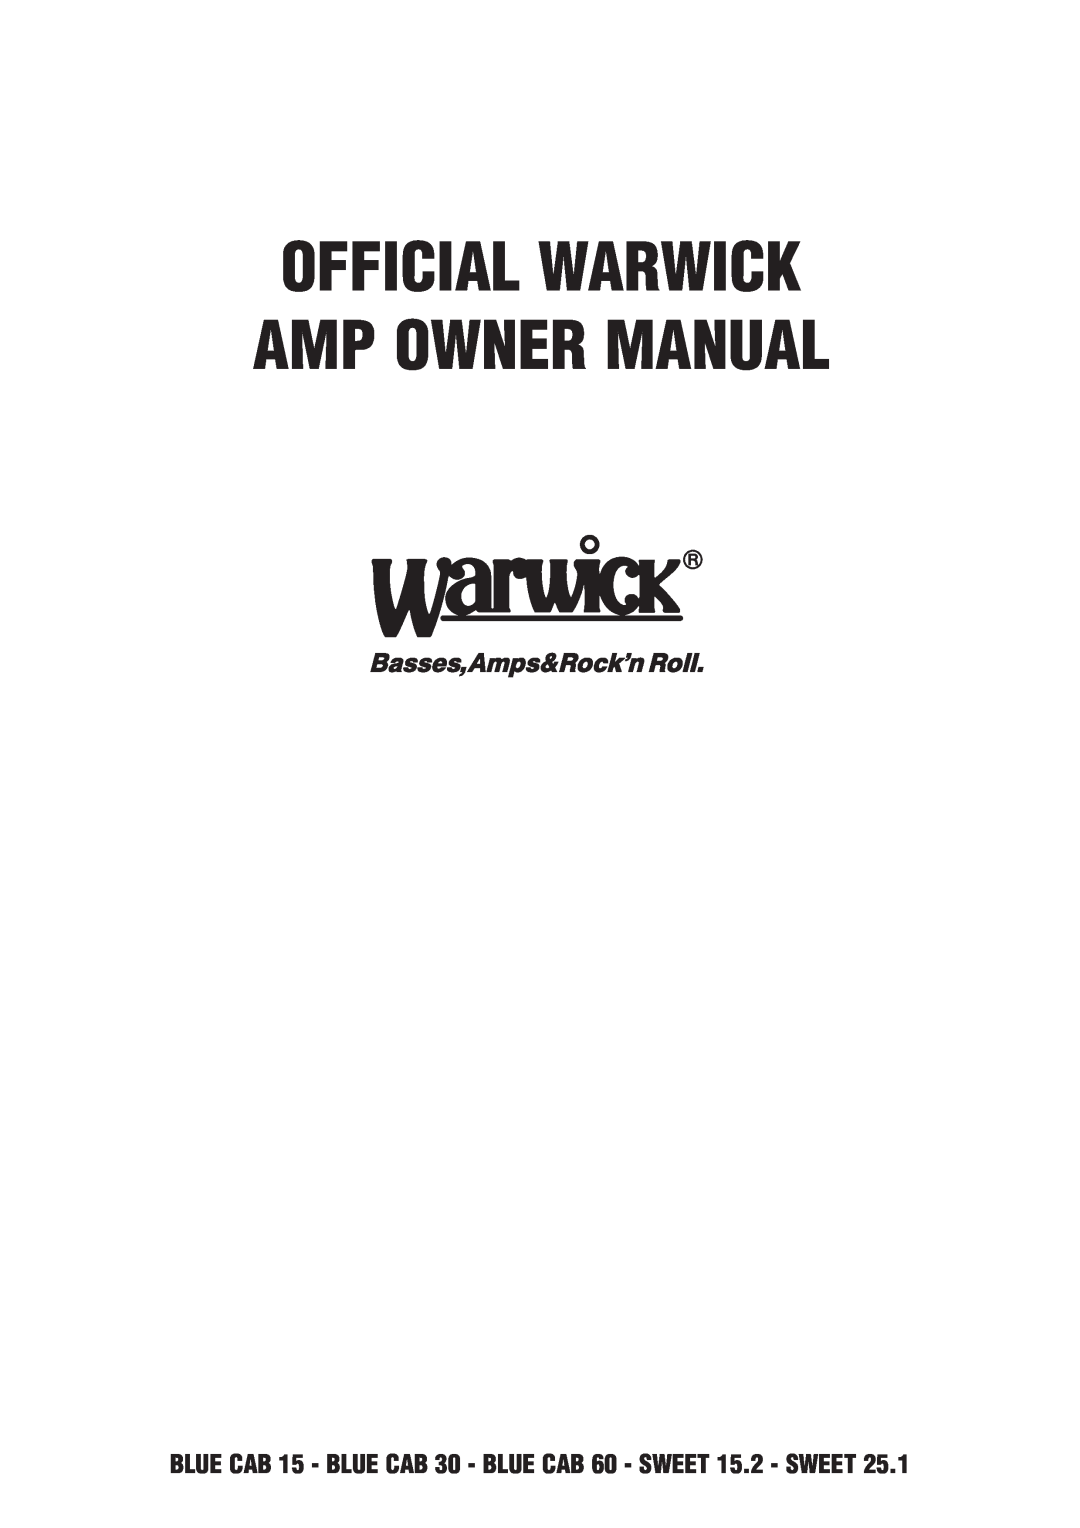 Warwick 25.1, 15.2 owner manual 